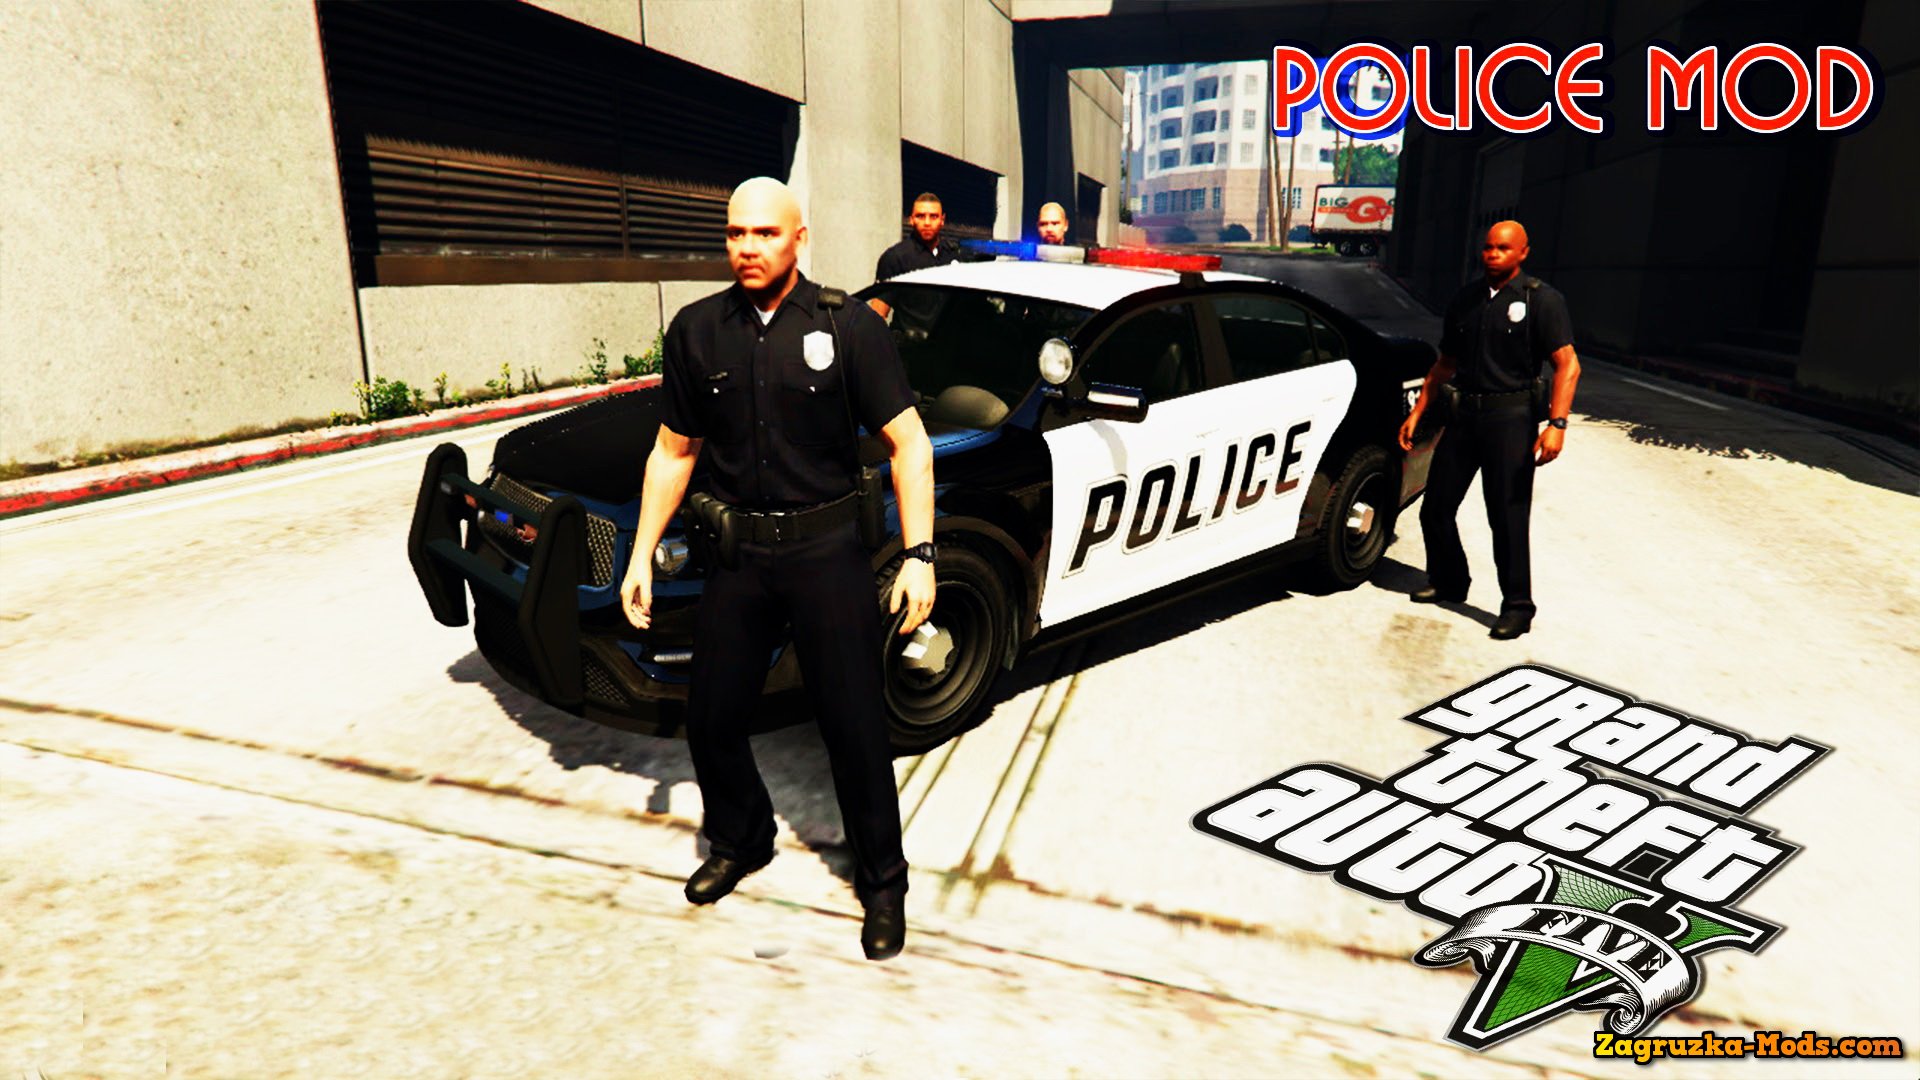 Overview of GTA V Police mode